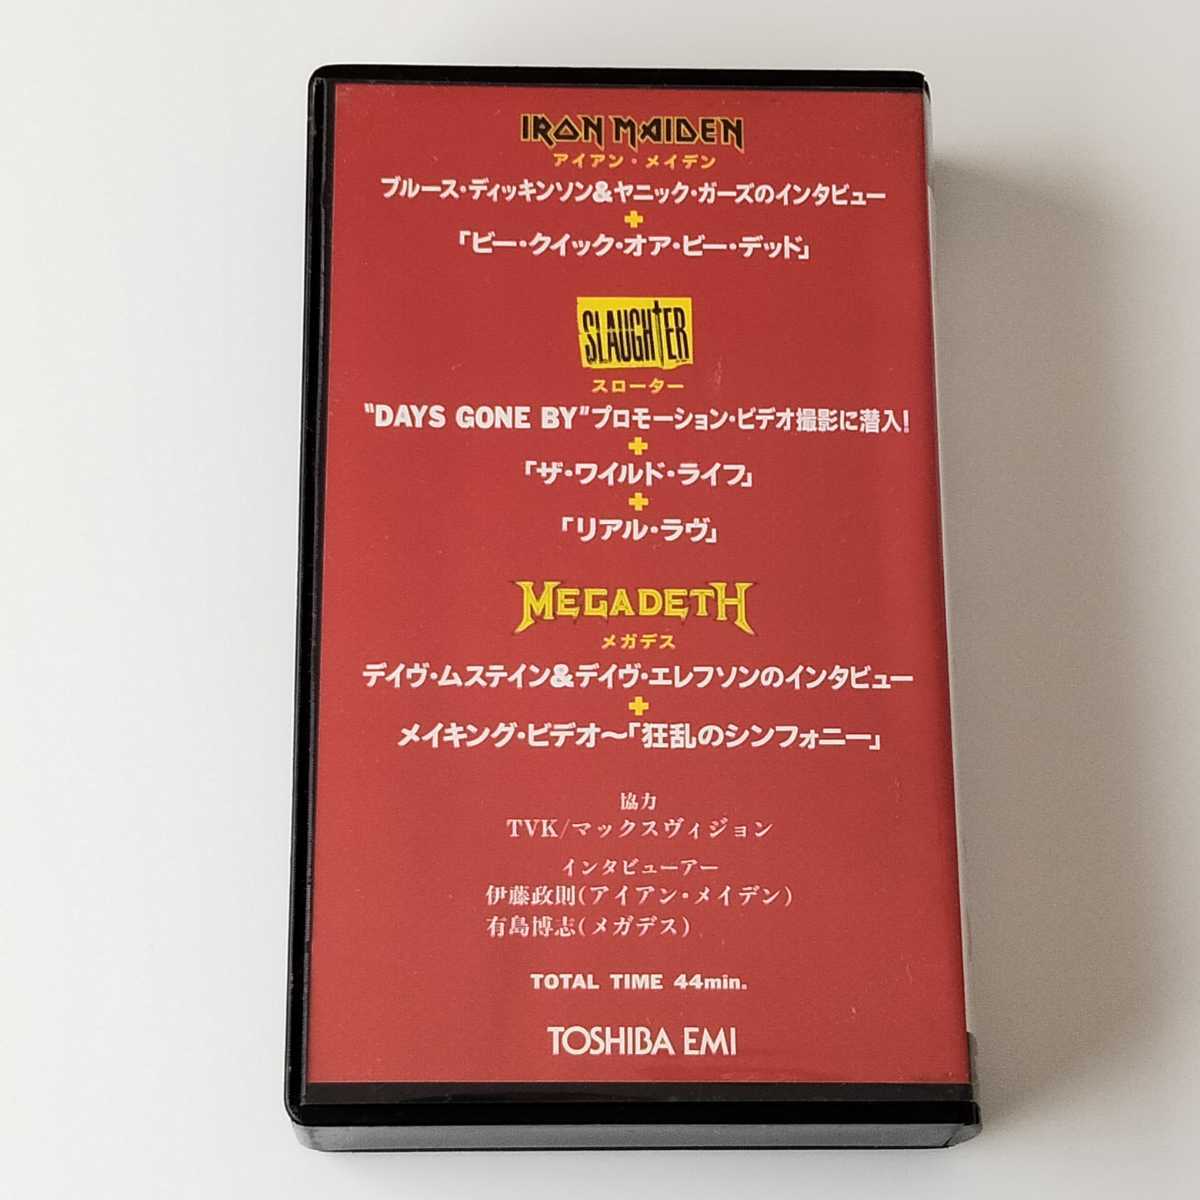 [ Toshiba EMI не продается VHS]HARD ATTACK 92 твердый * attack 1992 специальный видео /IRON MAIDEN,SLAUGHTER,MEGADETH, железный Maiden, mega tes